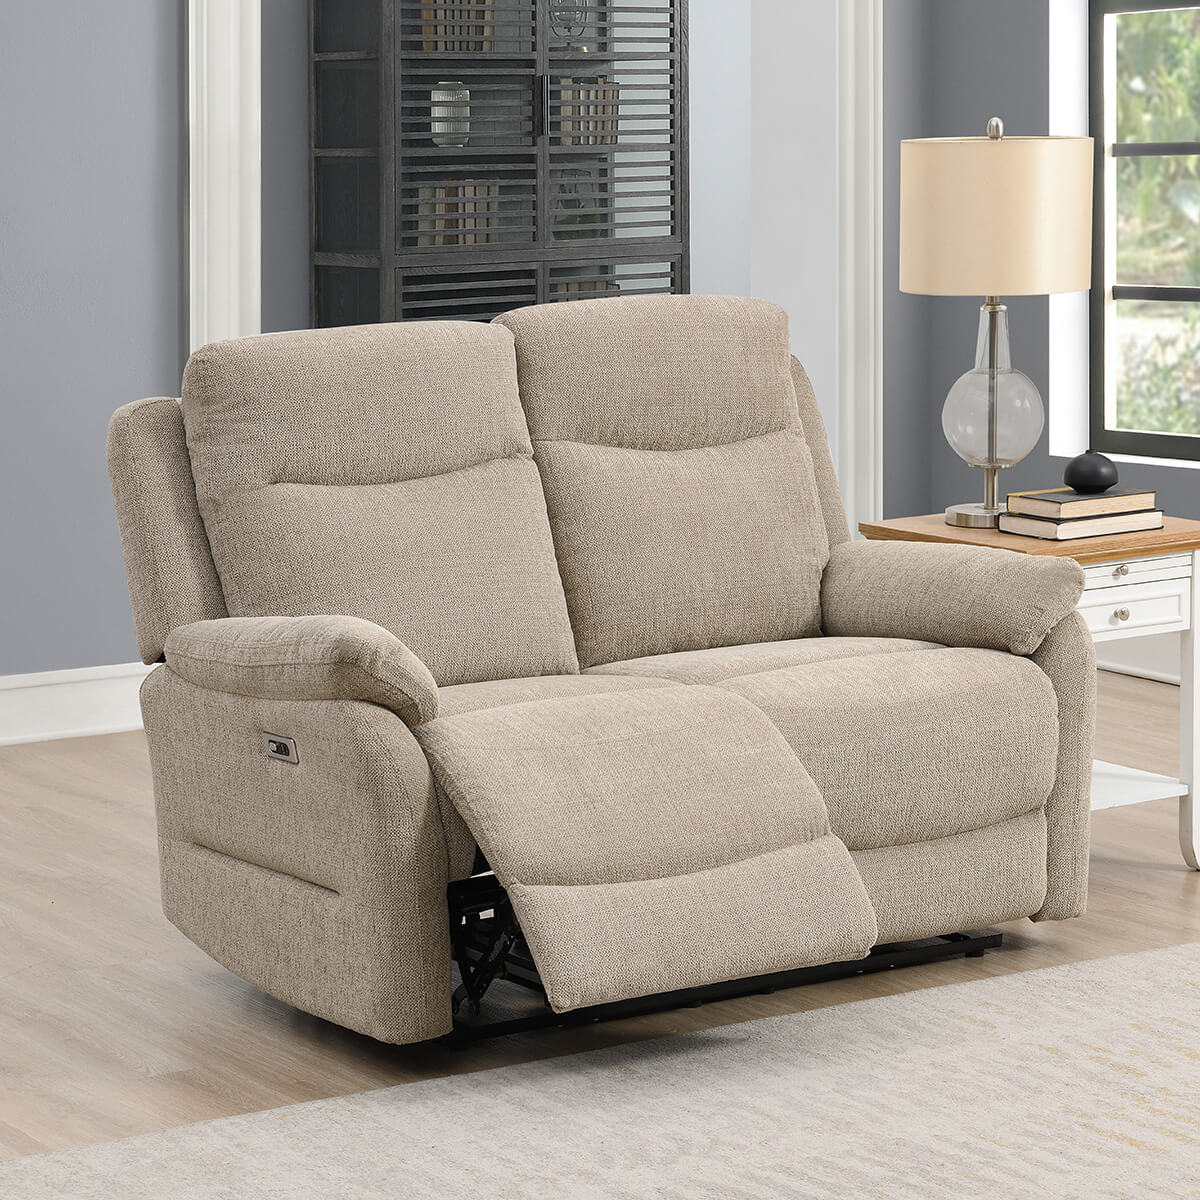 Keegan 2 Seater Electric Recling Sofa – Oatmeal